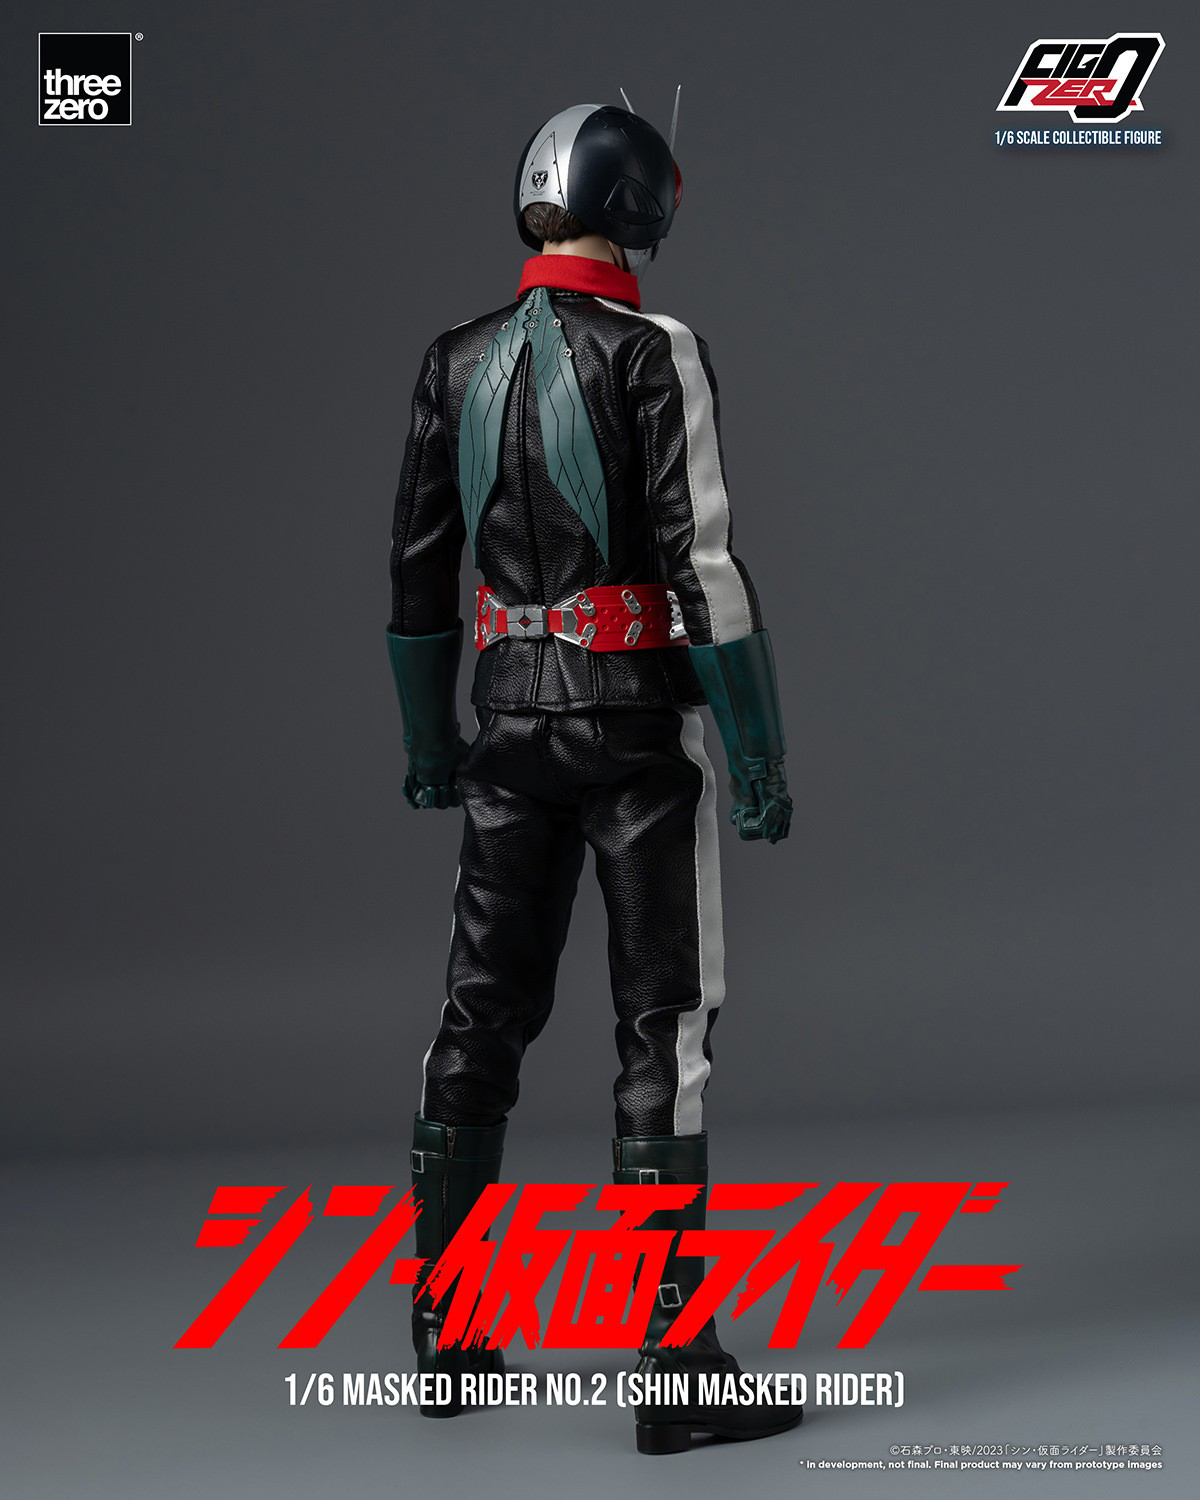 Shin Masked Rider No. 2 (Prototype Shown) View 10